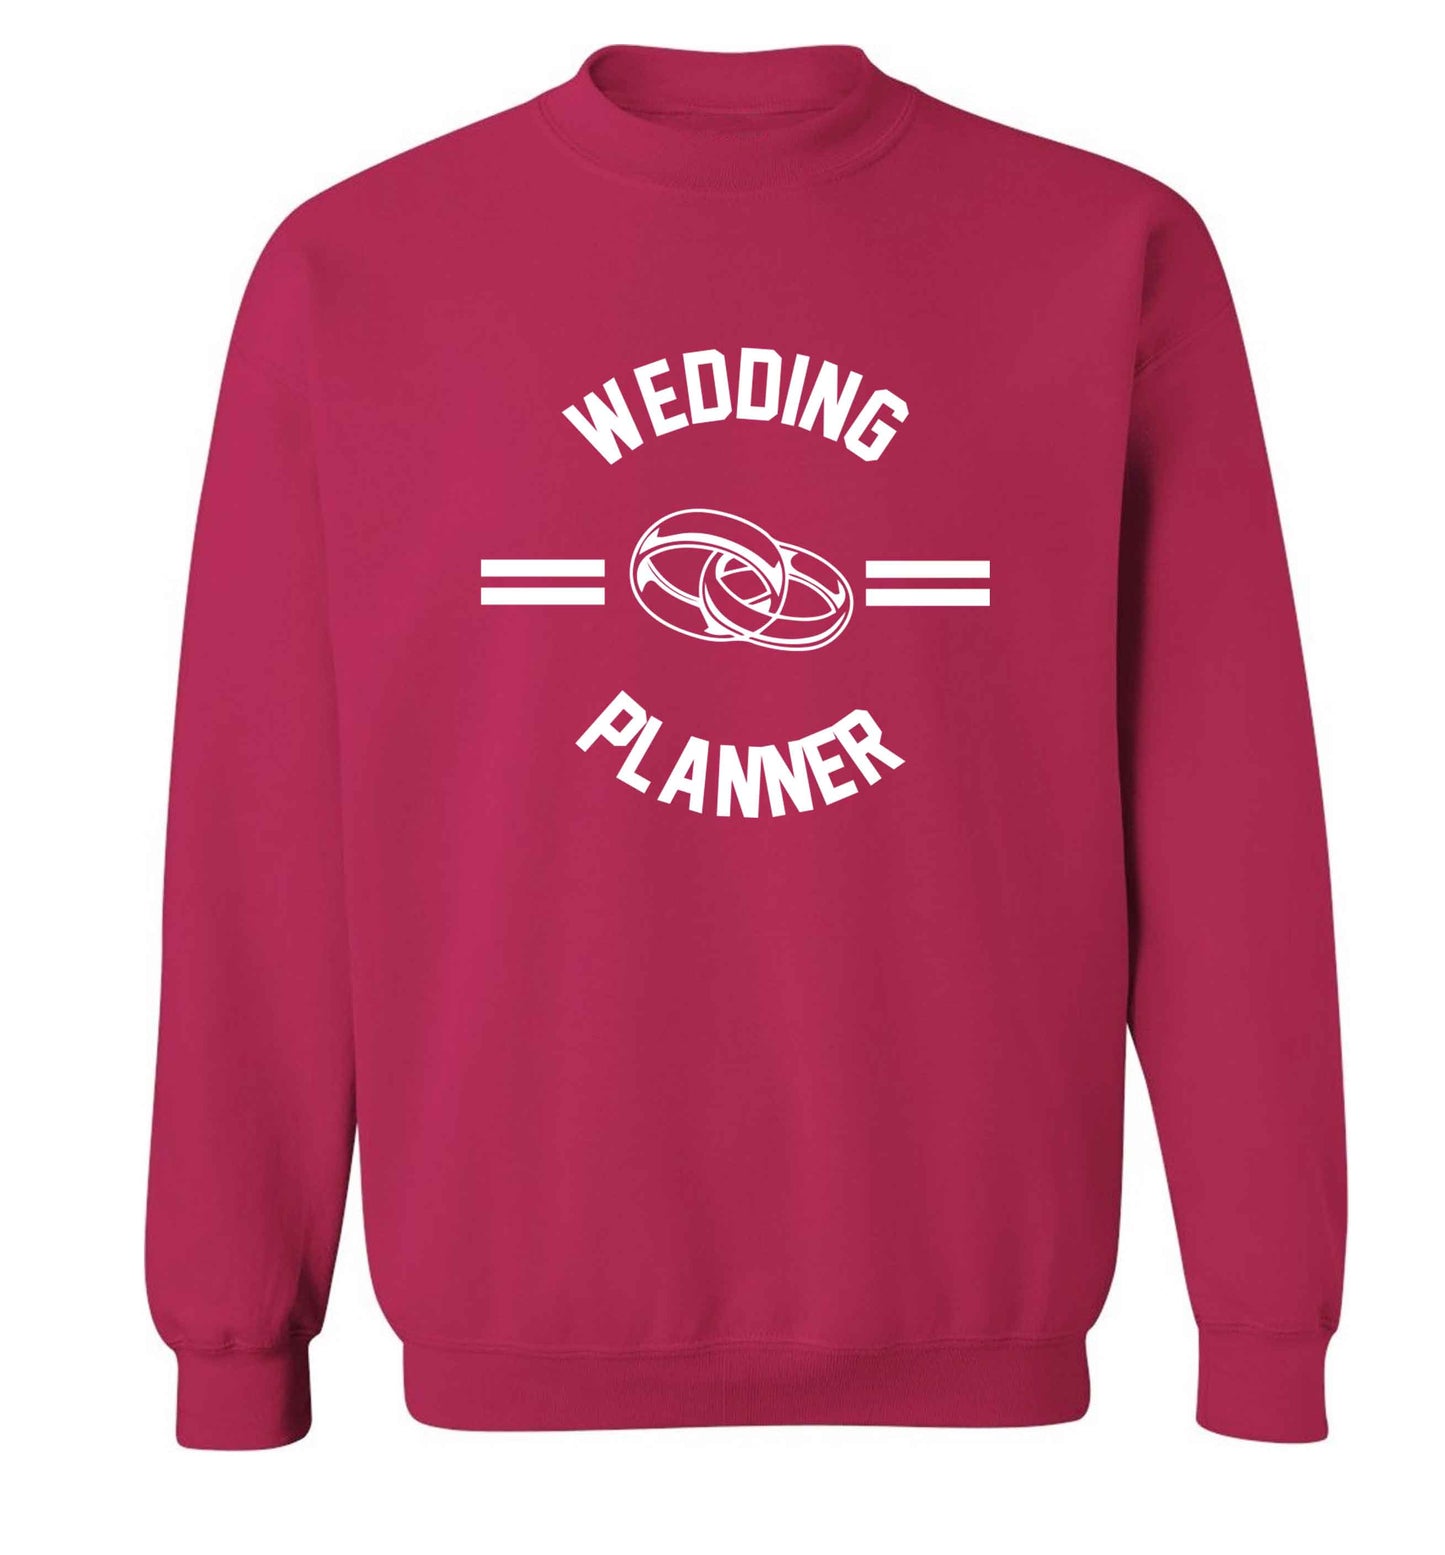 Wedding planner adult's unisex pink sweater 2XL